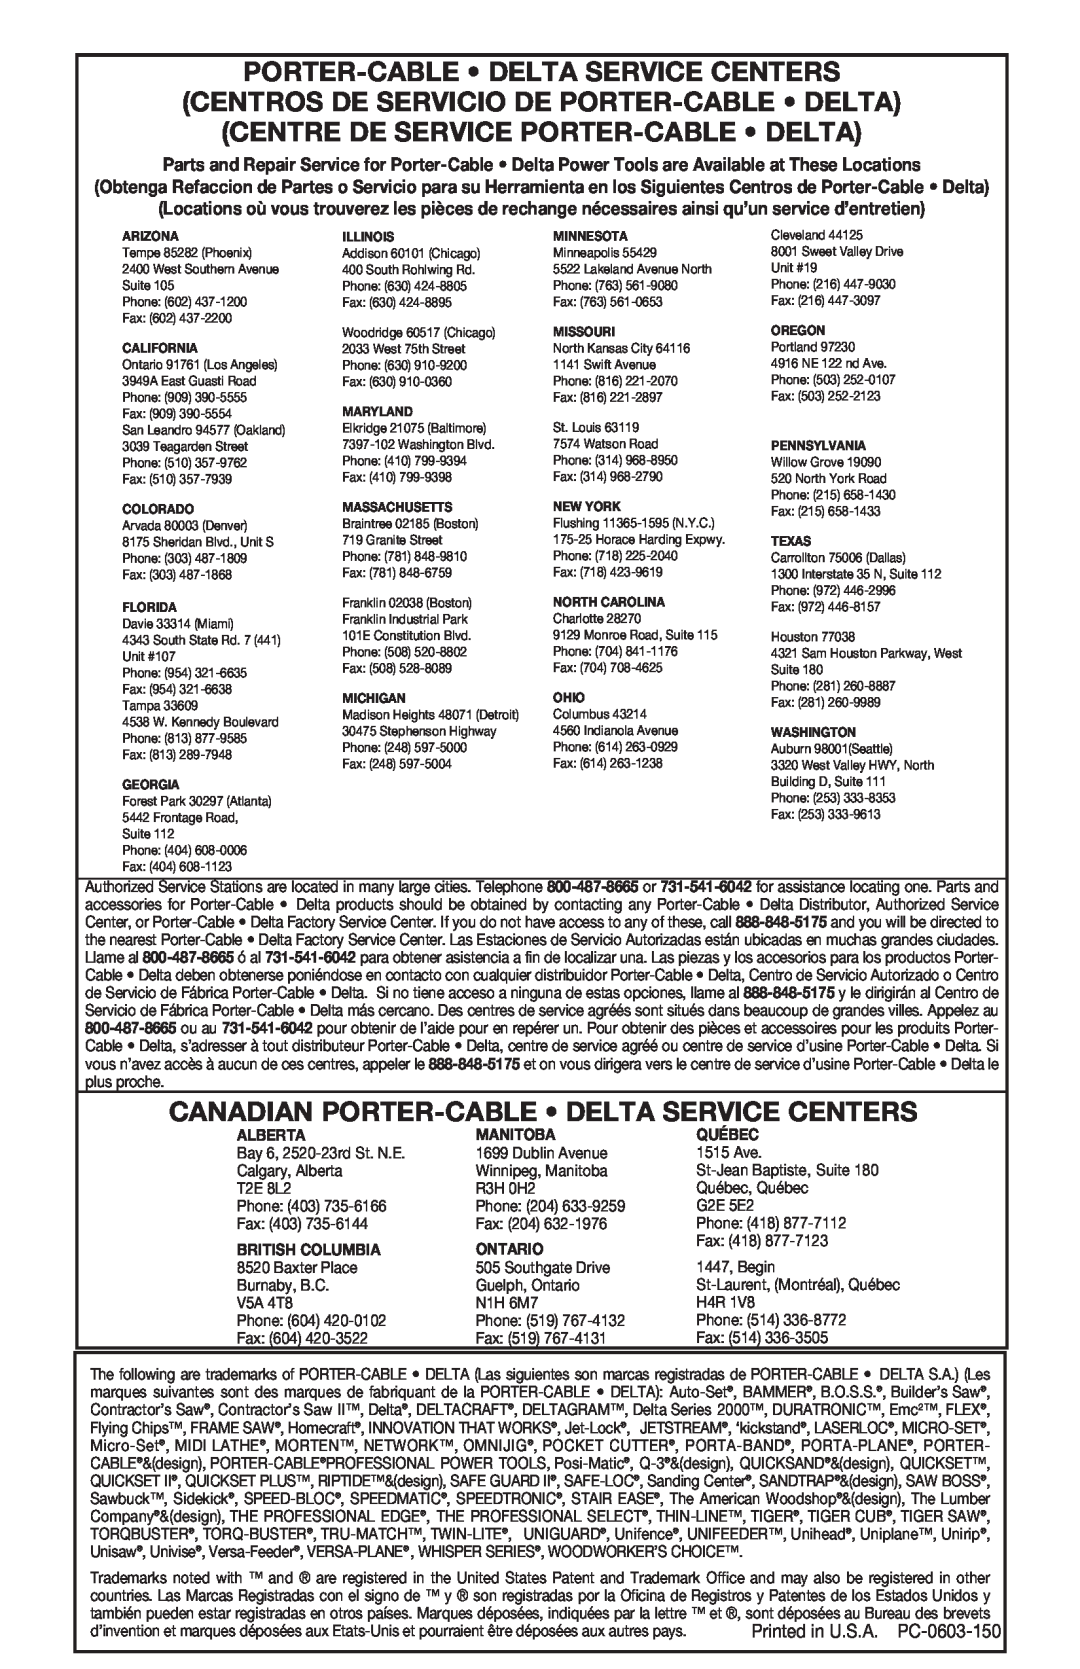 Porter-Cable 7537 Porter-Cable Delta Service Centers, Centros De Servicio De Porter-Cable Delta, Alberta, Manitoba, Québec 